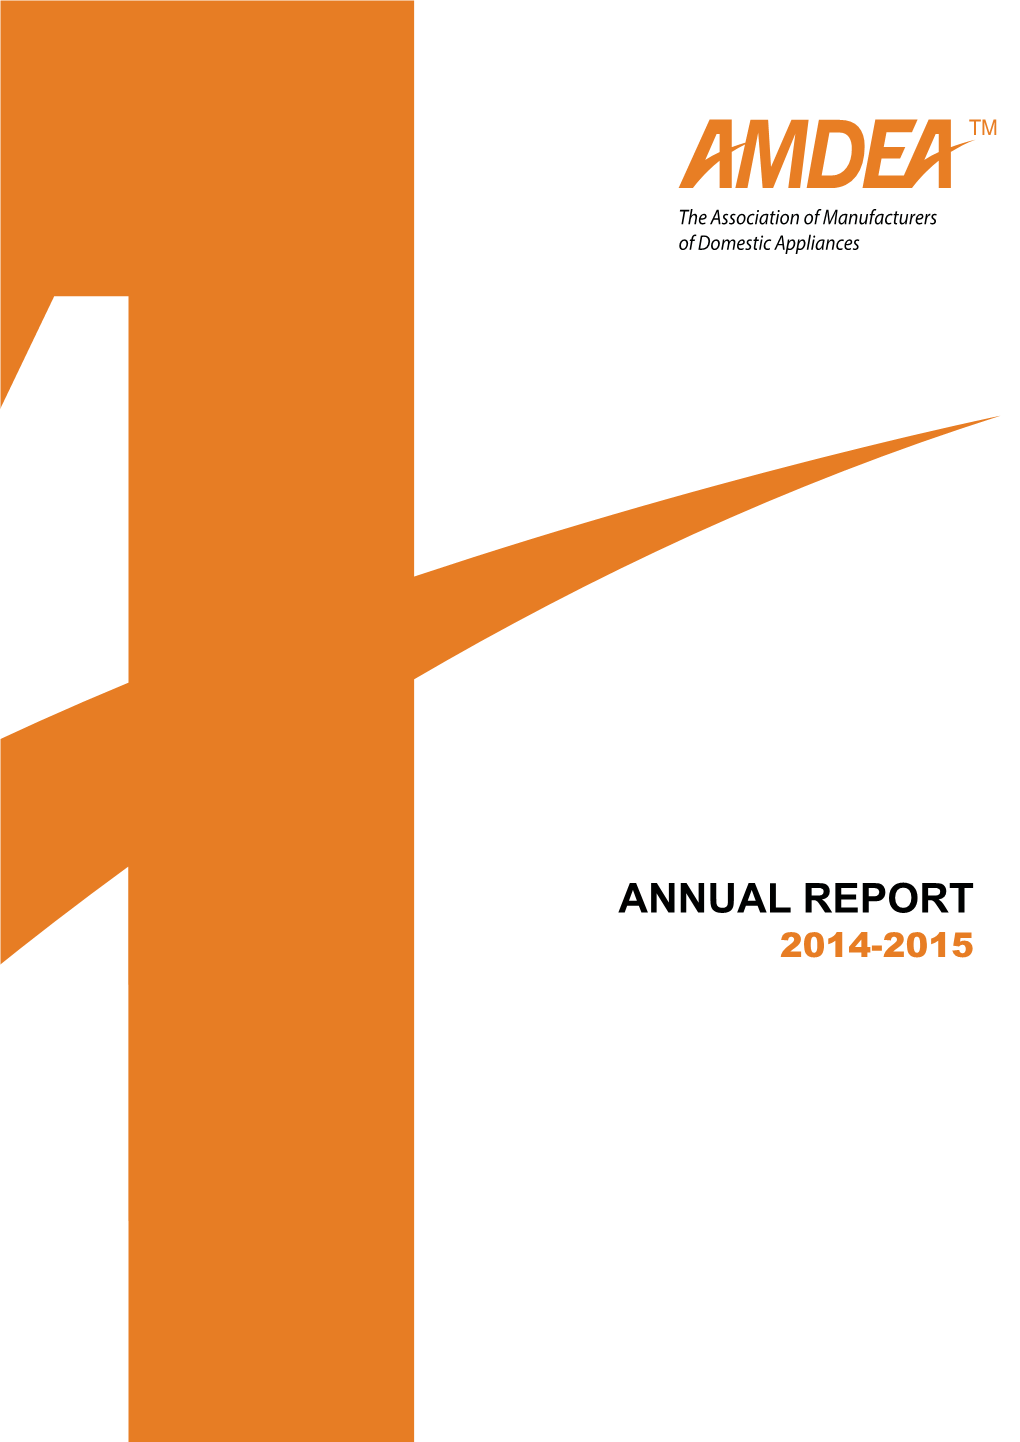 AMDEA Annual Report 2014-2015